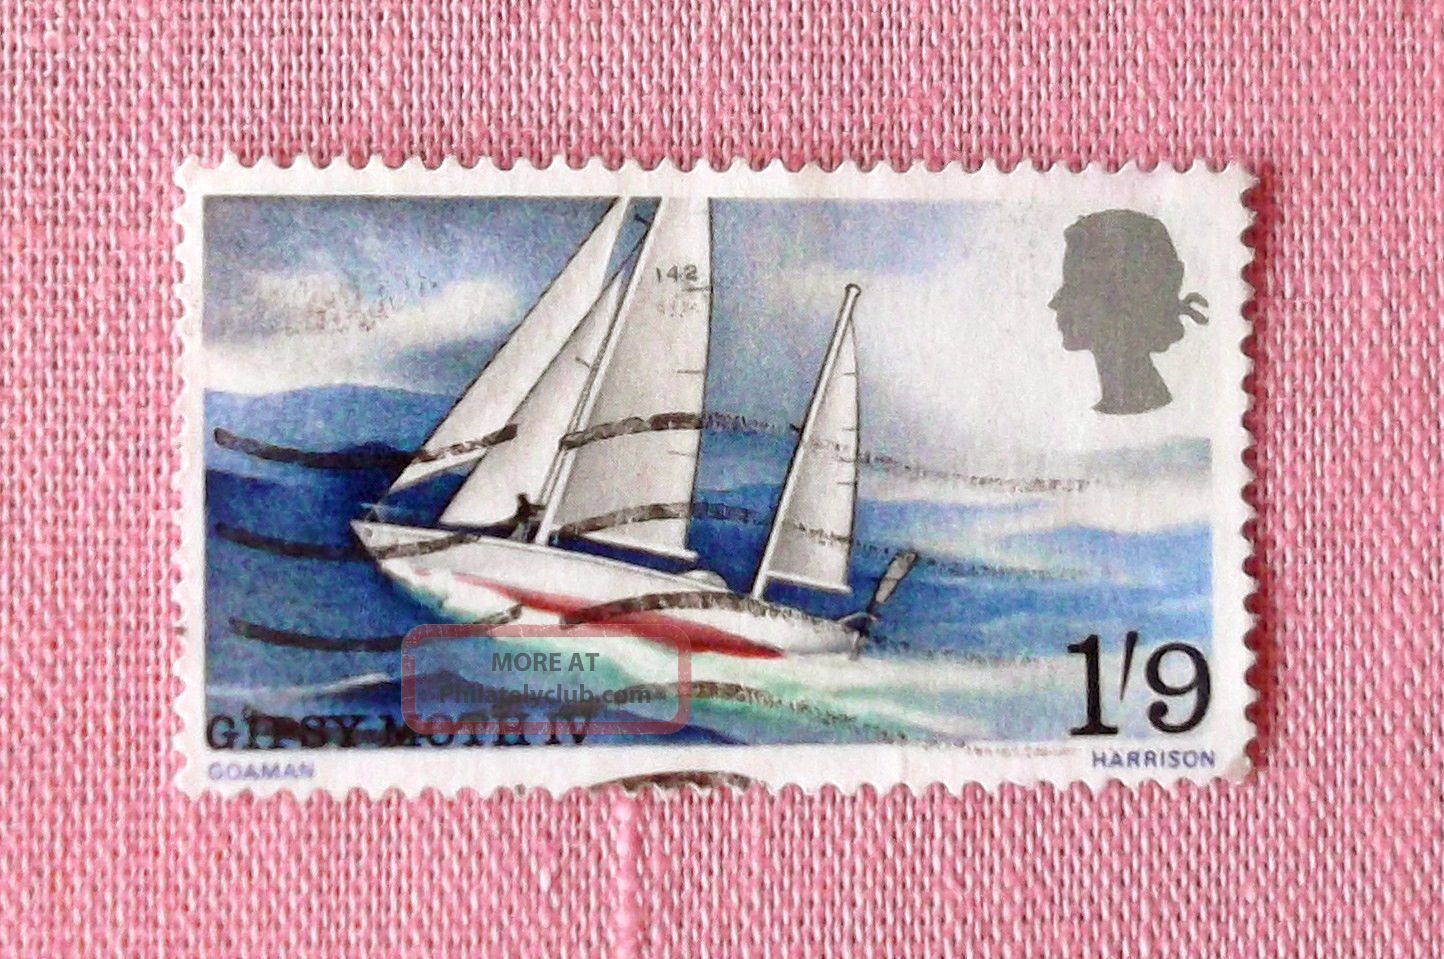 Qe Com - Sir Francis Chichester ' S World Voyage - 24/7/1967 - Good Elizabeth II photo